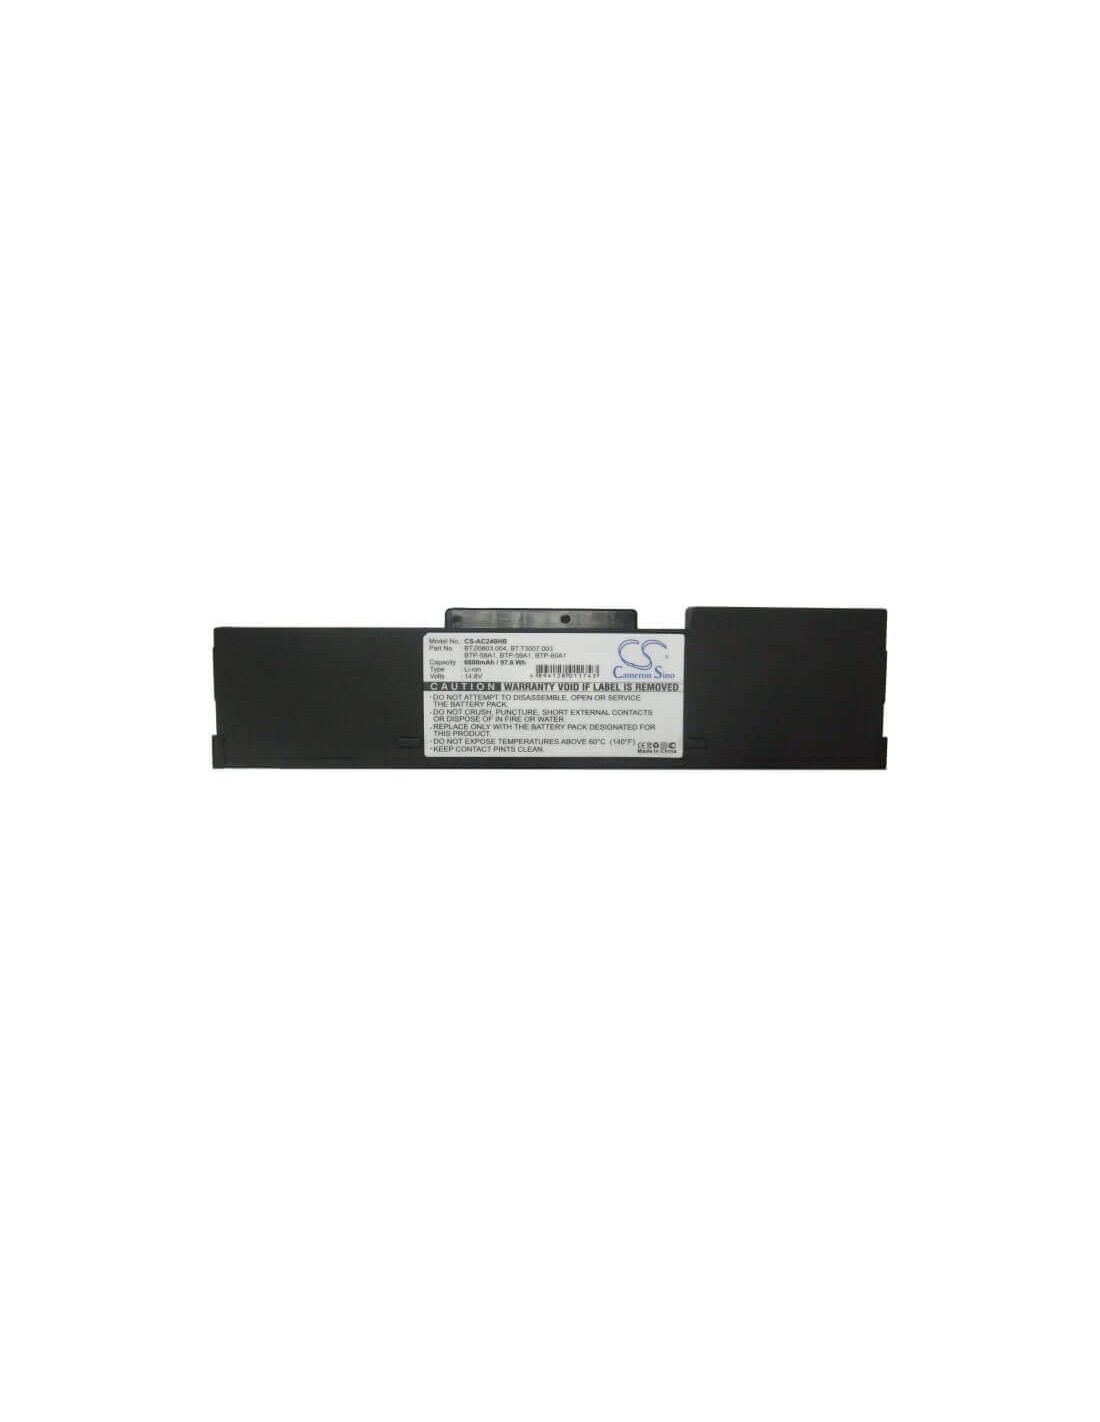 Dark grey Battery for Acer Travelmate 242fx(ms2138), Aspire 1363wlm, Aspire 1363wlmi 14.8V, 6600mAh - 97.68Wh